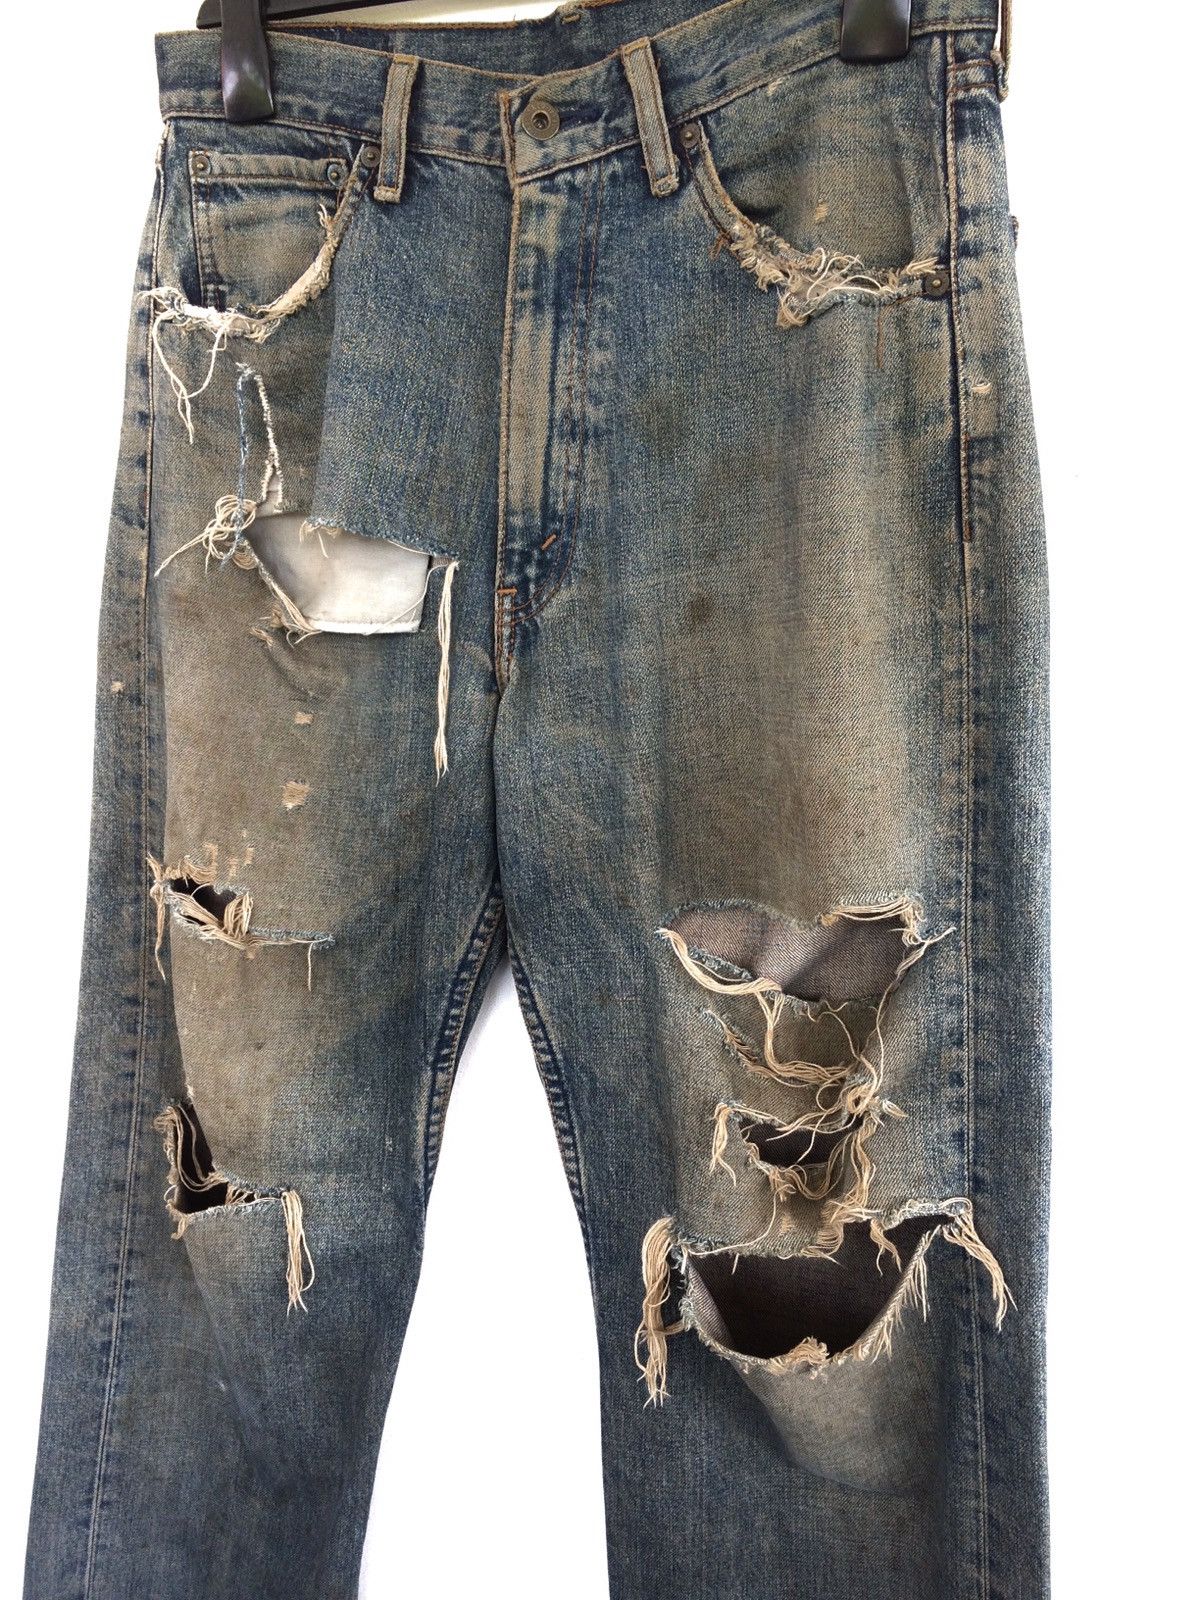 Vintage Levis Distressed Kurt Cobain Fashion Style Denim Pant Size US 31 - 3 Thumbnail